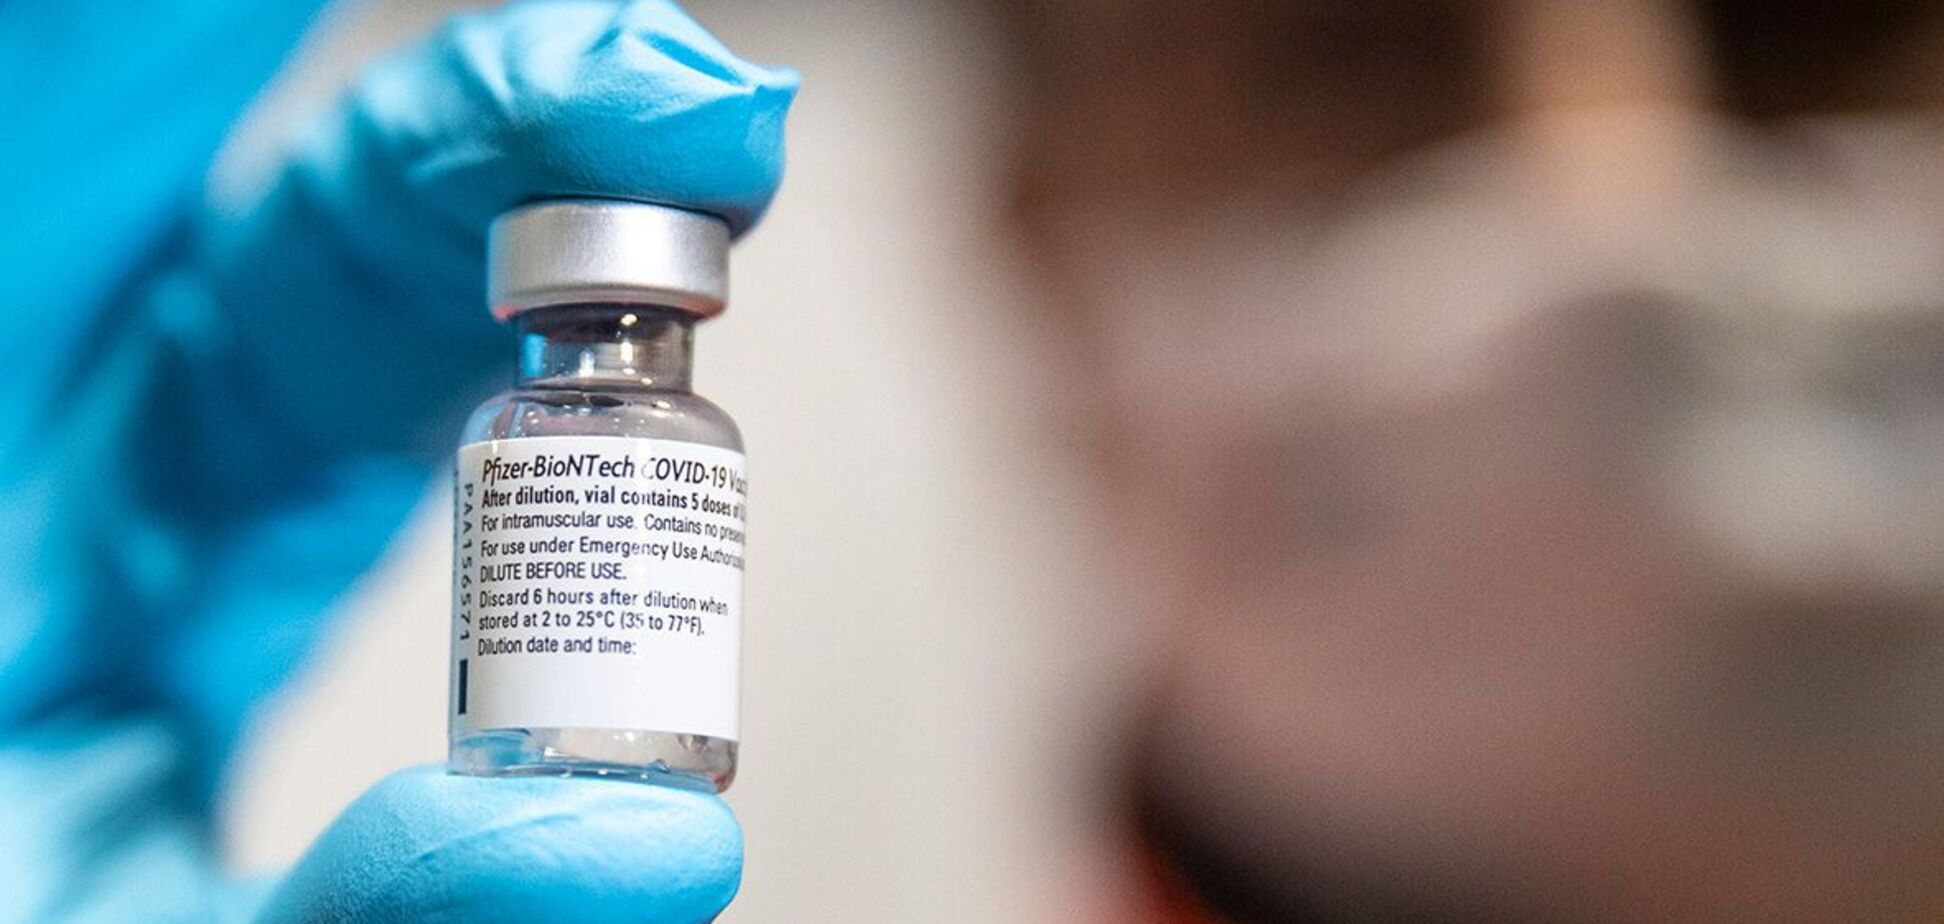 В Минздраве развенчали популярный фейк о влиянии вакцины от COVID-19 на ДНК